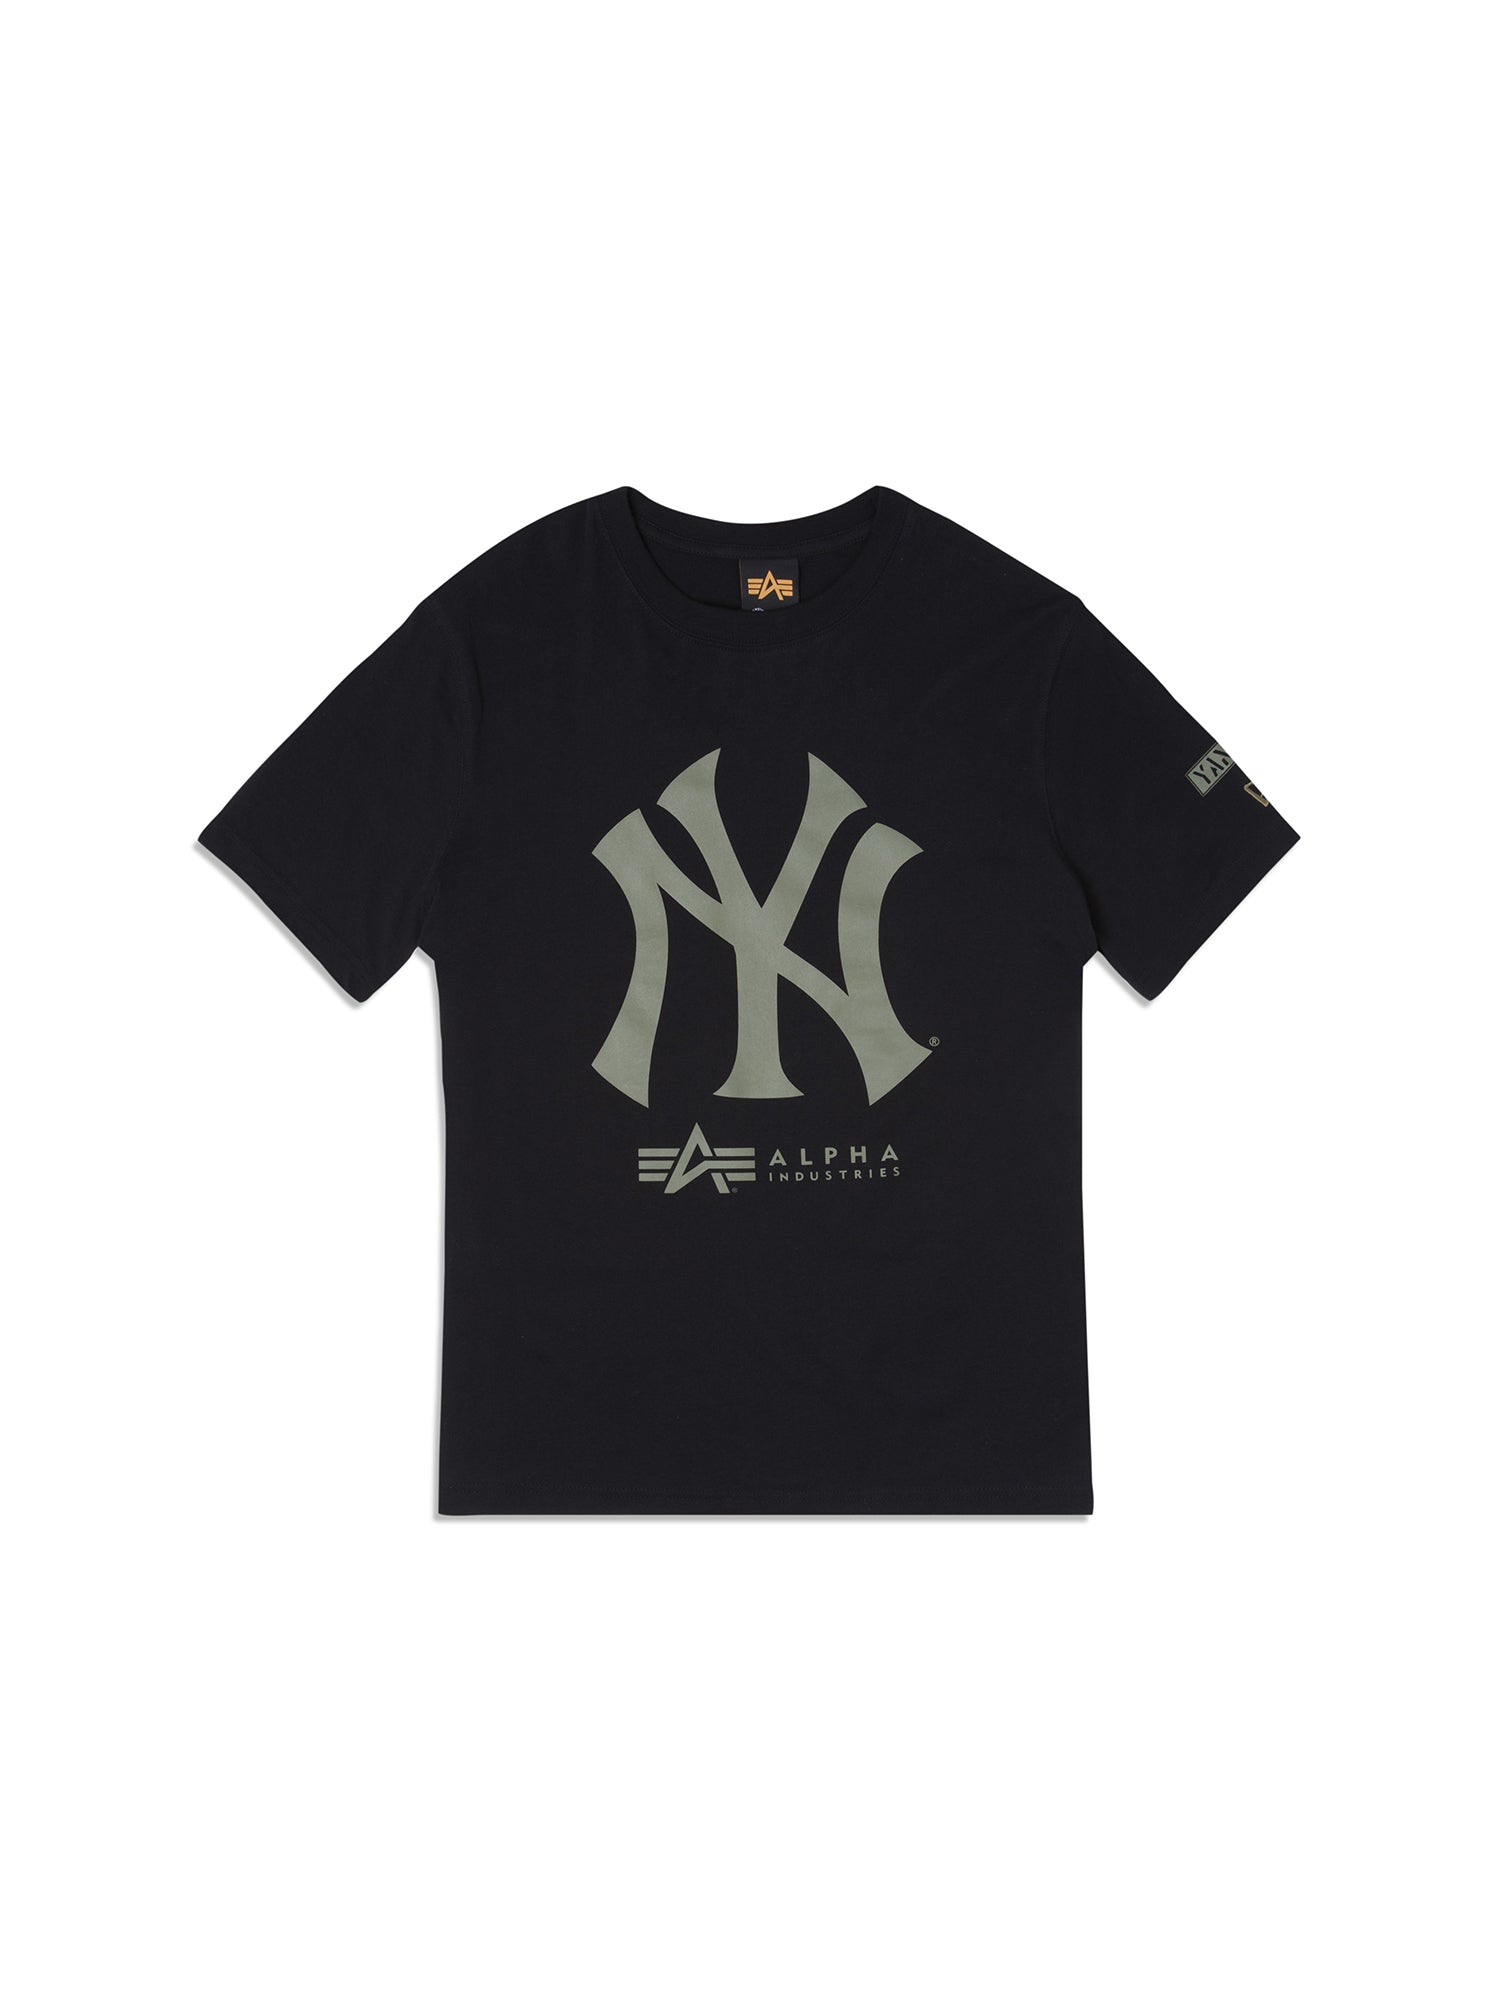 New York Yankees Shirts, Yankees Tees, Yankees T-Shirts